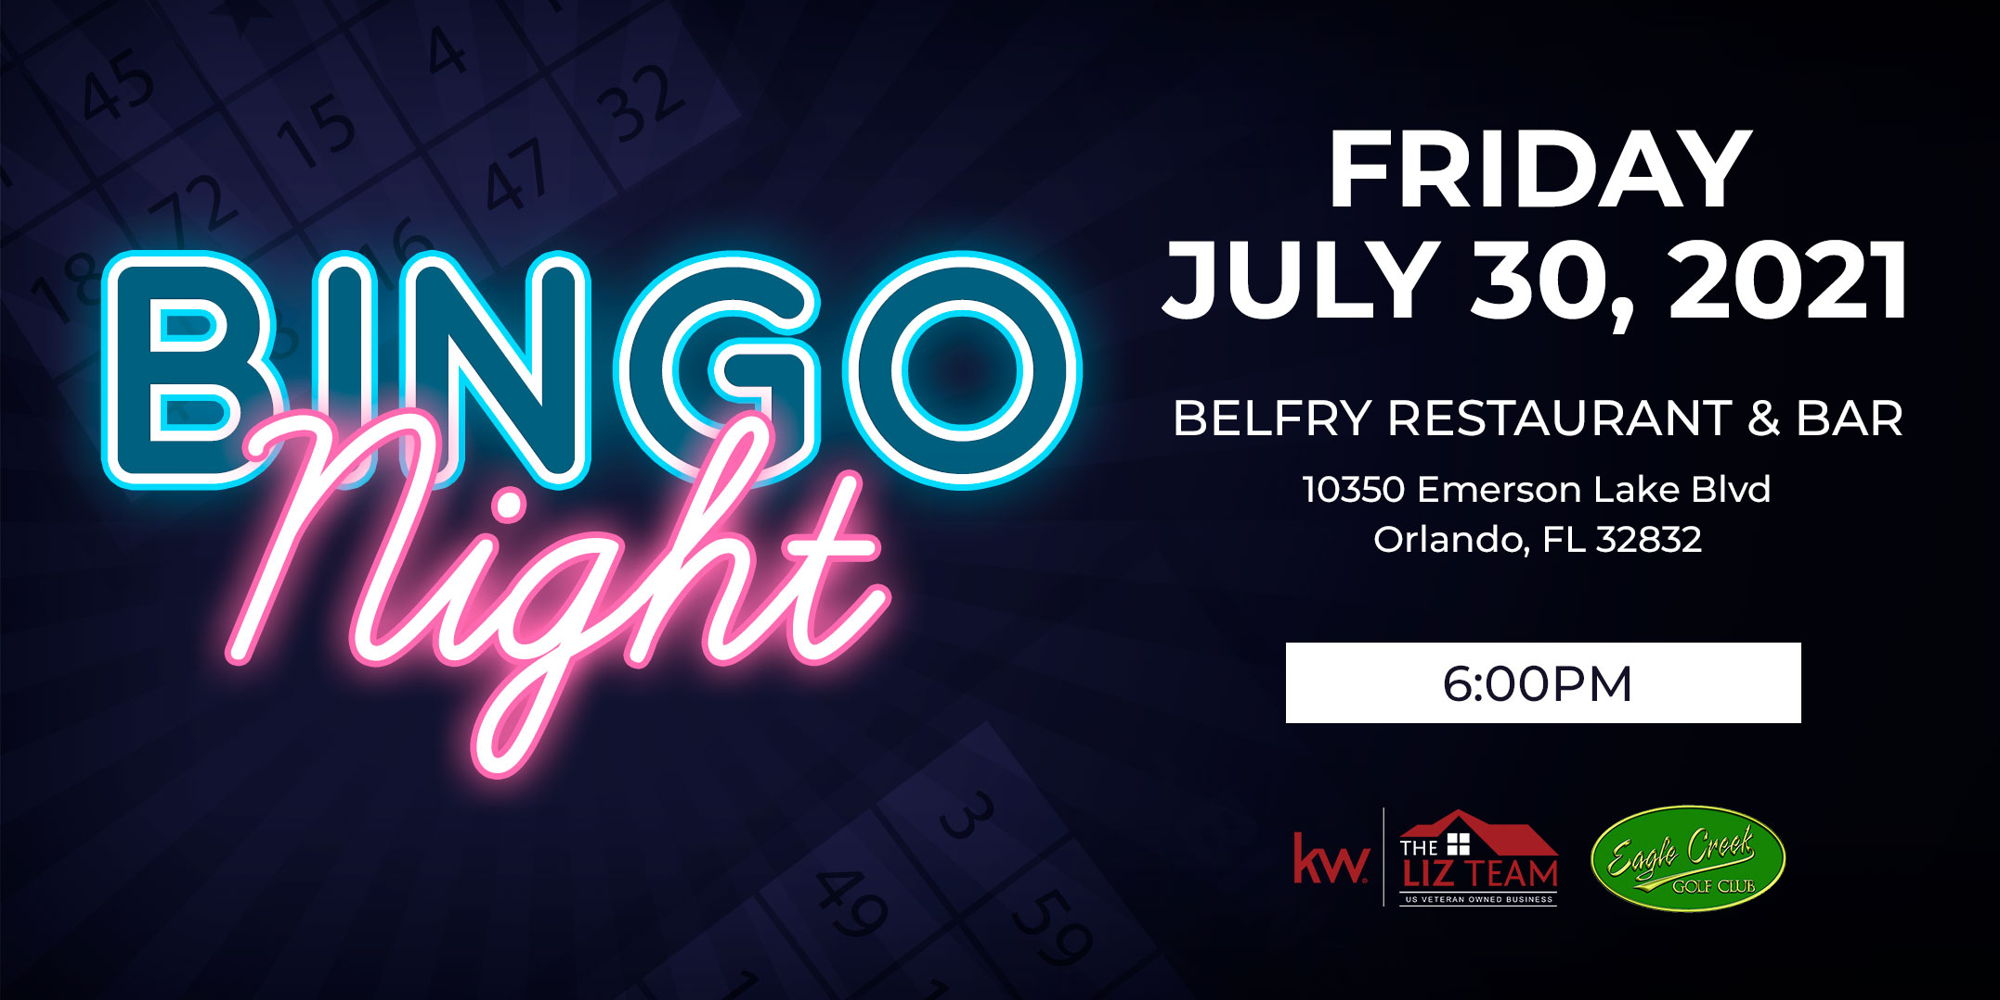 Bingo Night in LAKE NONA promotional image